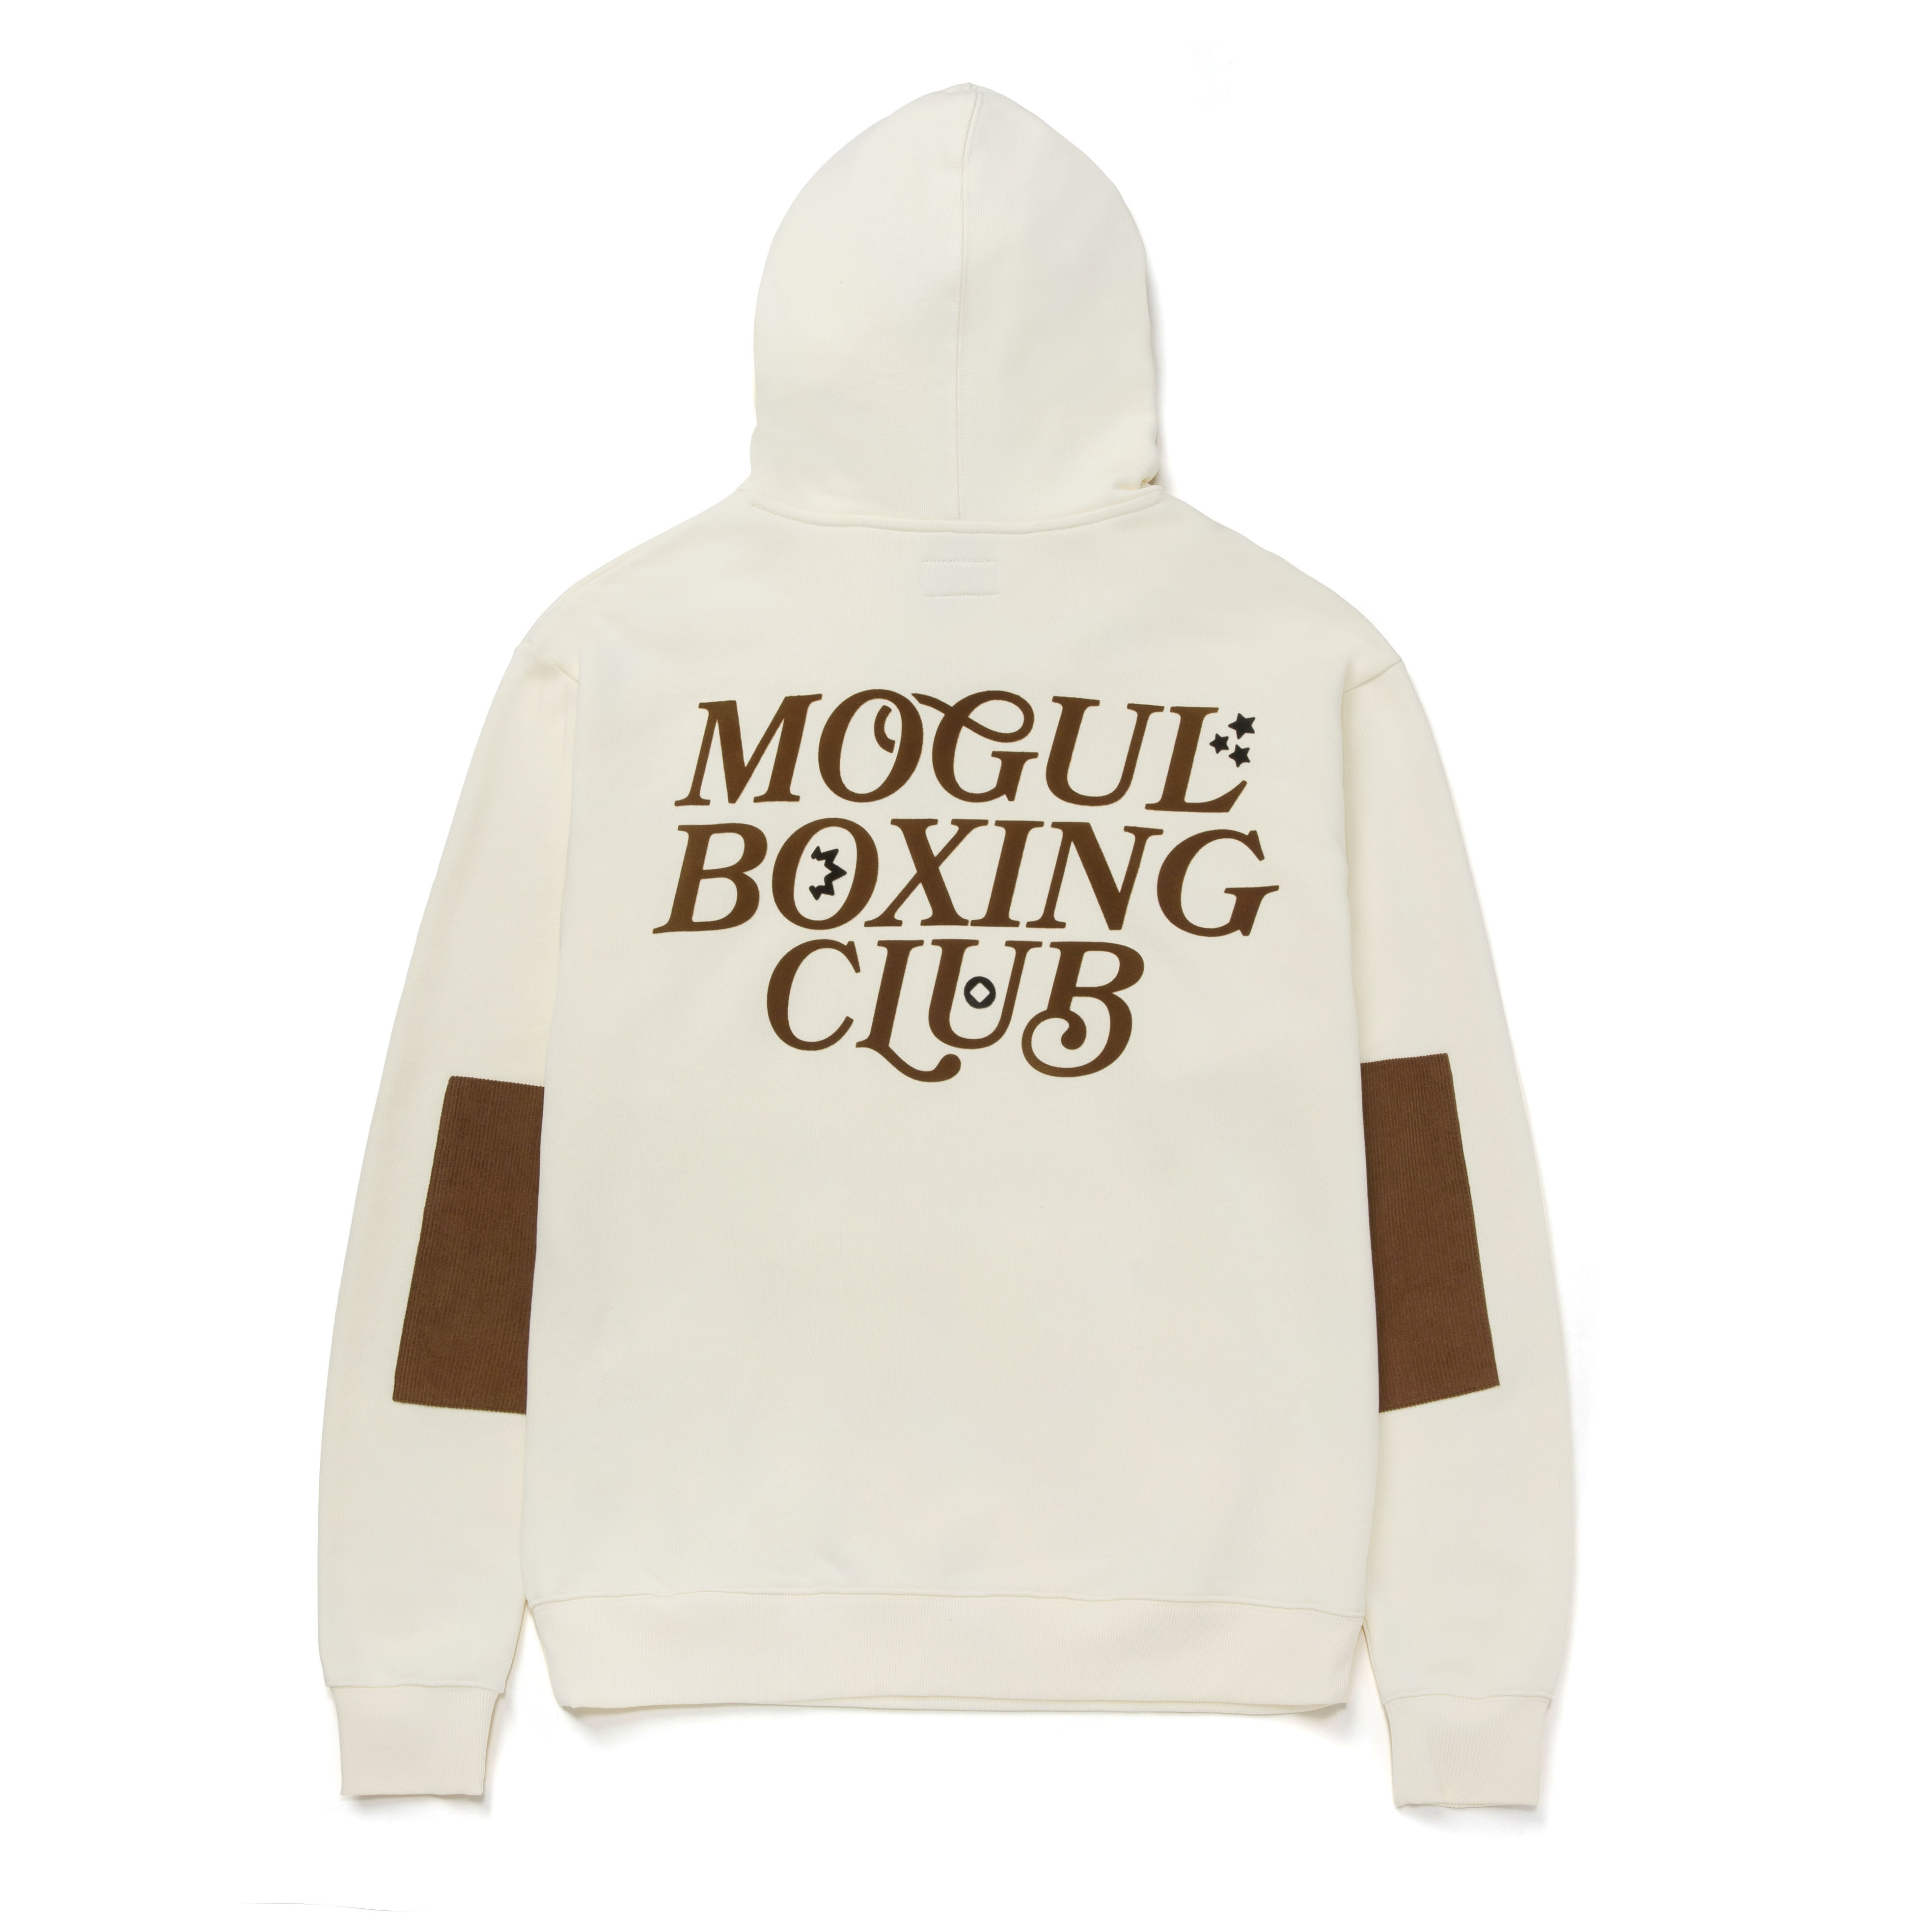 Ludwig chess boxing merch chess club T-shirt - Online Shoping